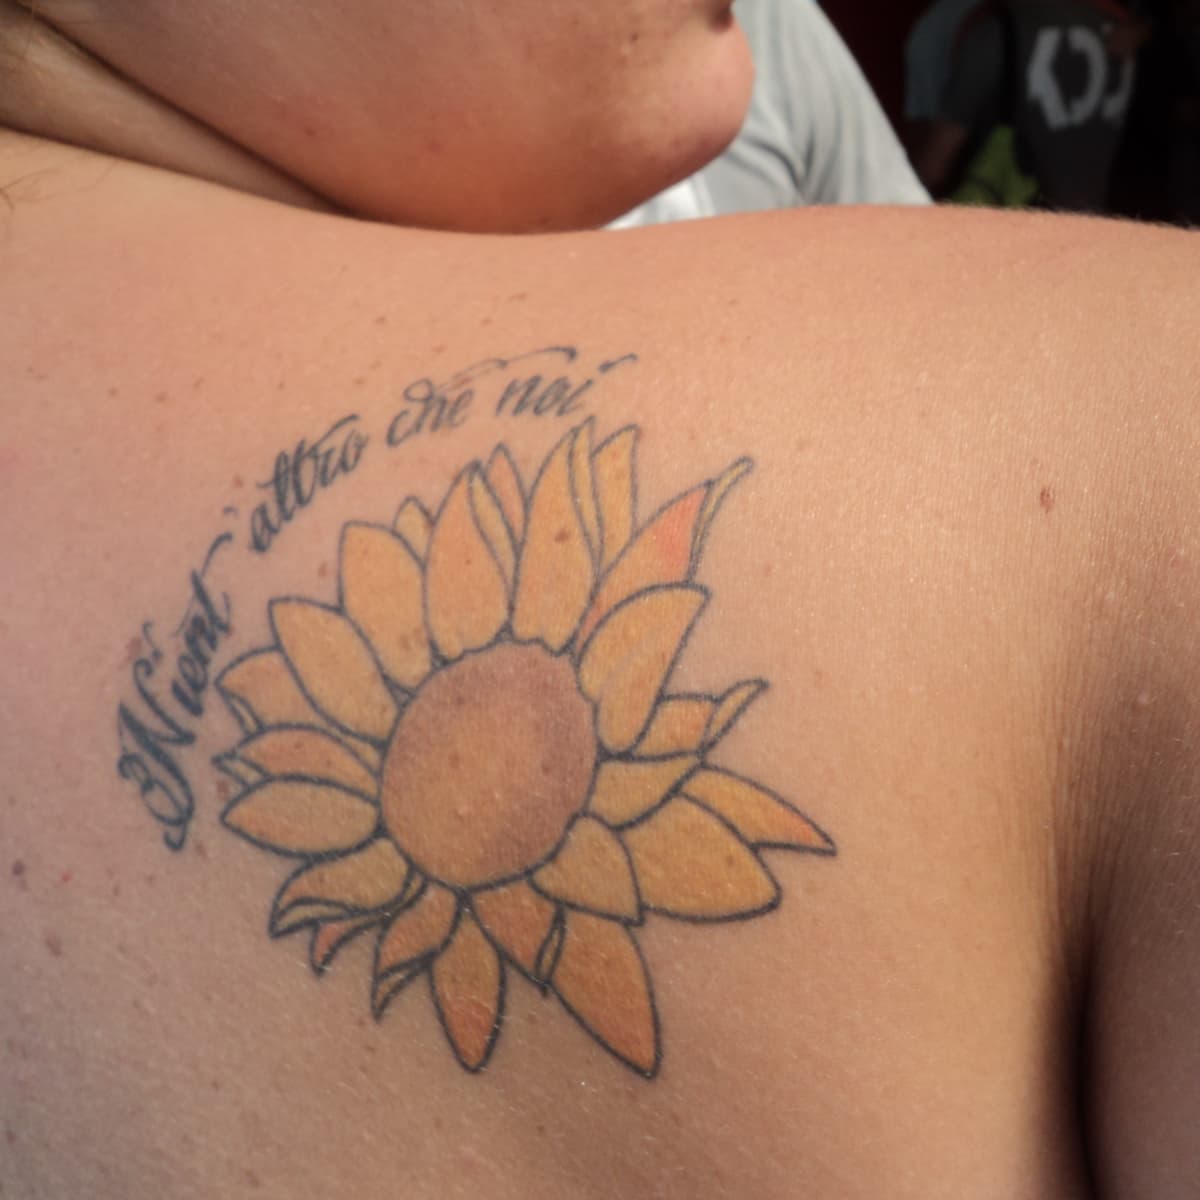 150 Vibrant Sunflower Tattoo Designs